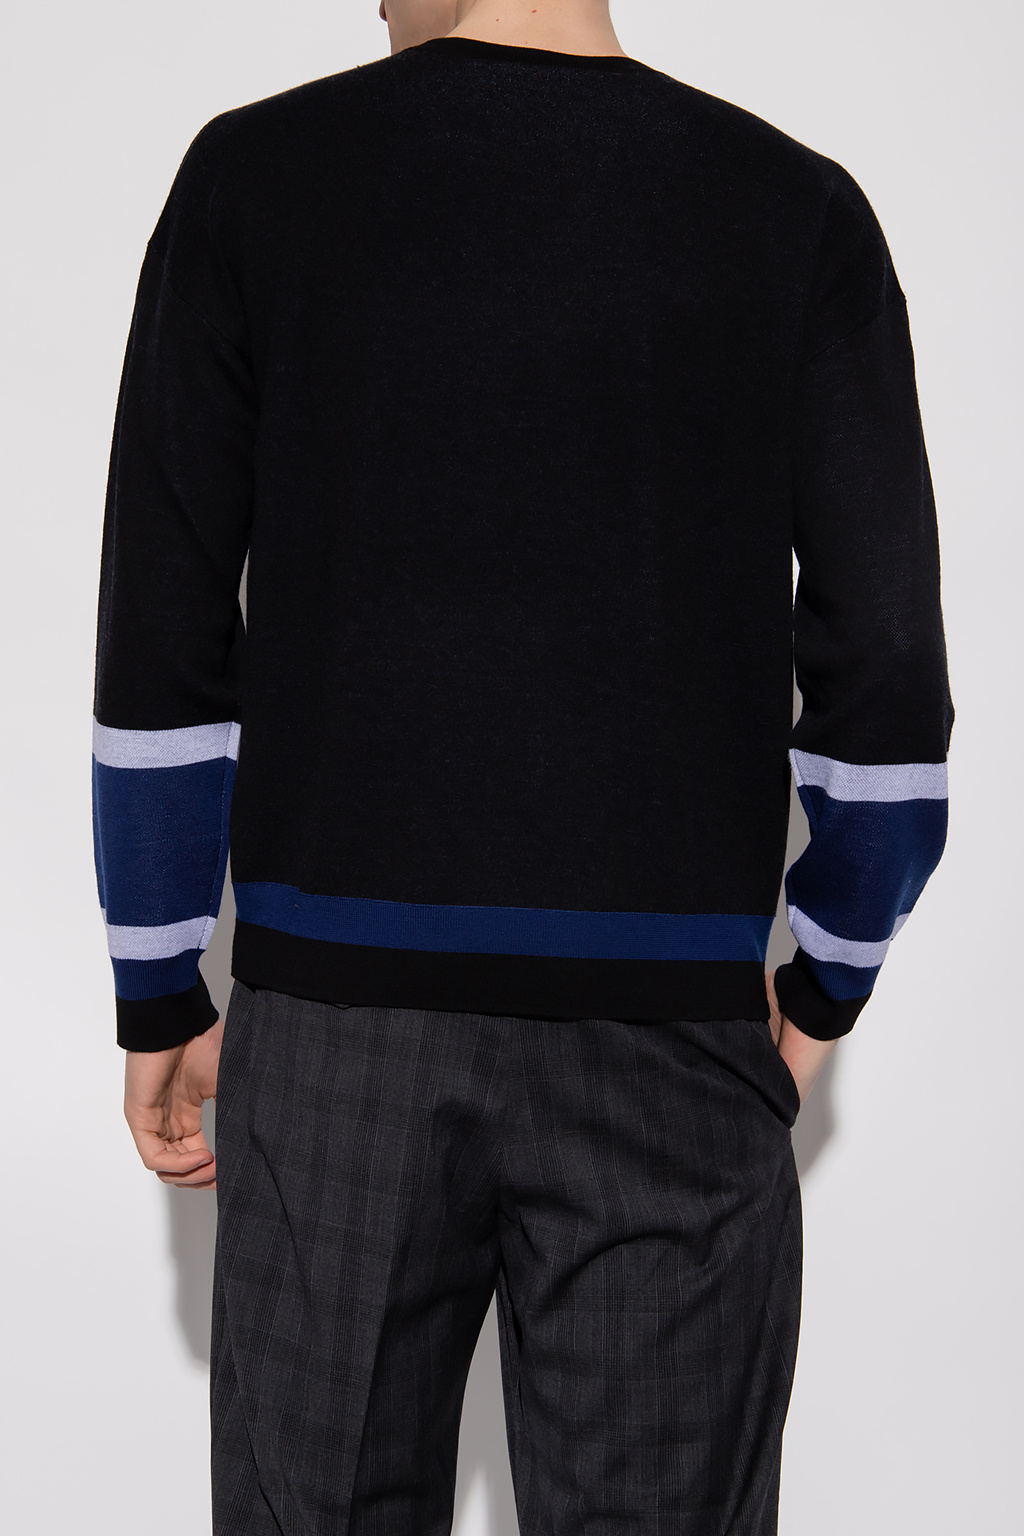 Emporio armani chevron ‘Sustainable’ collection wool sweater